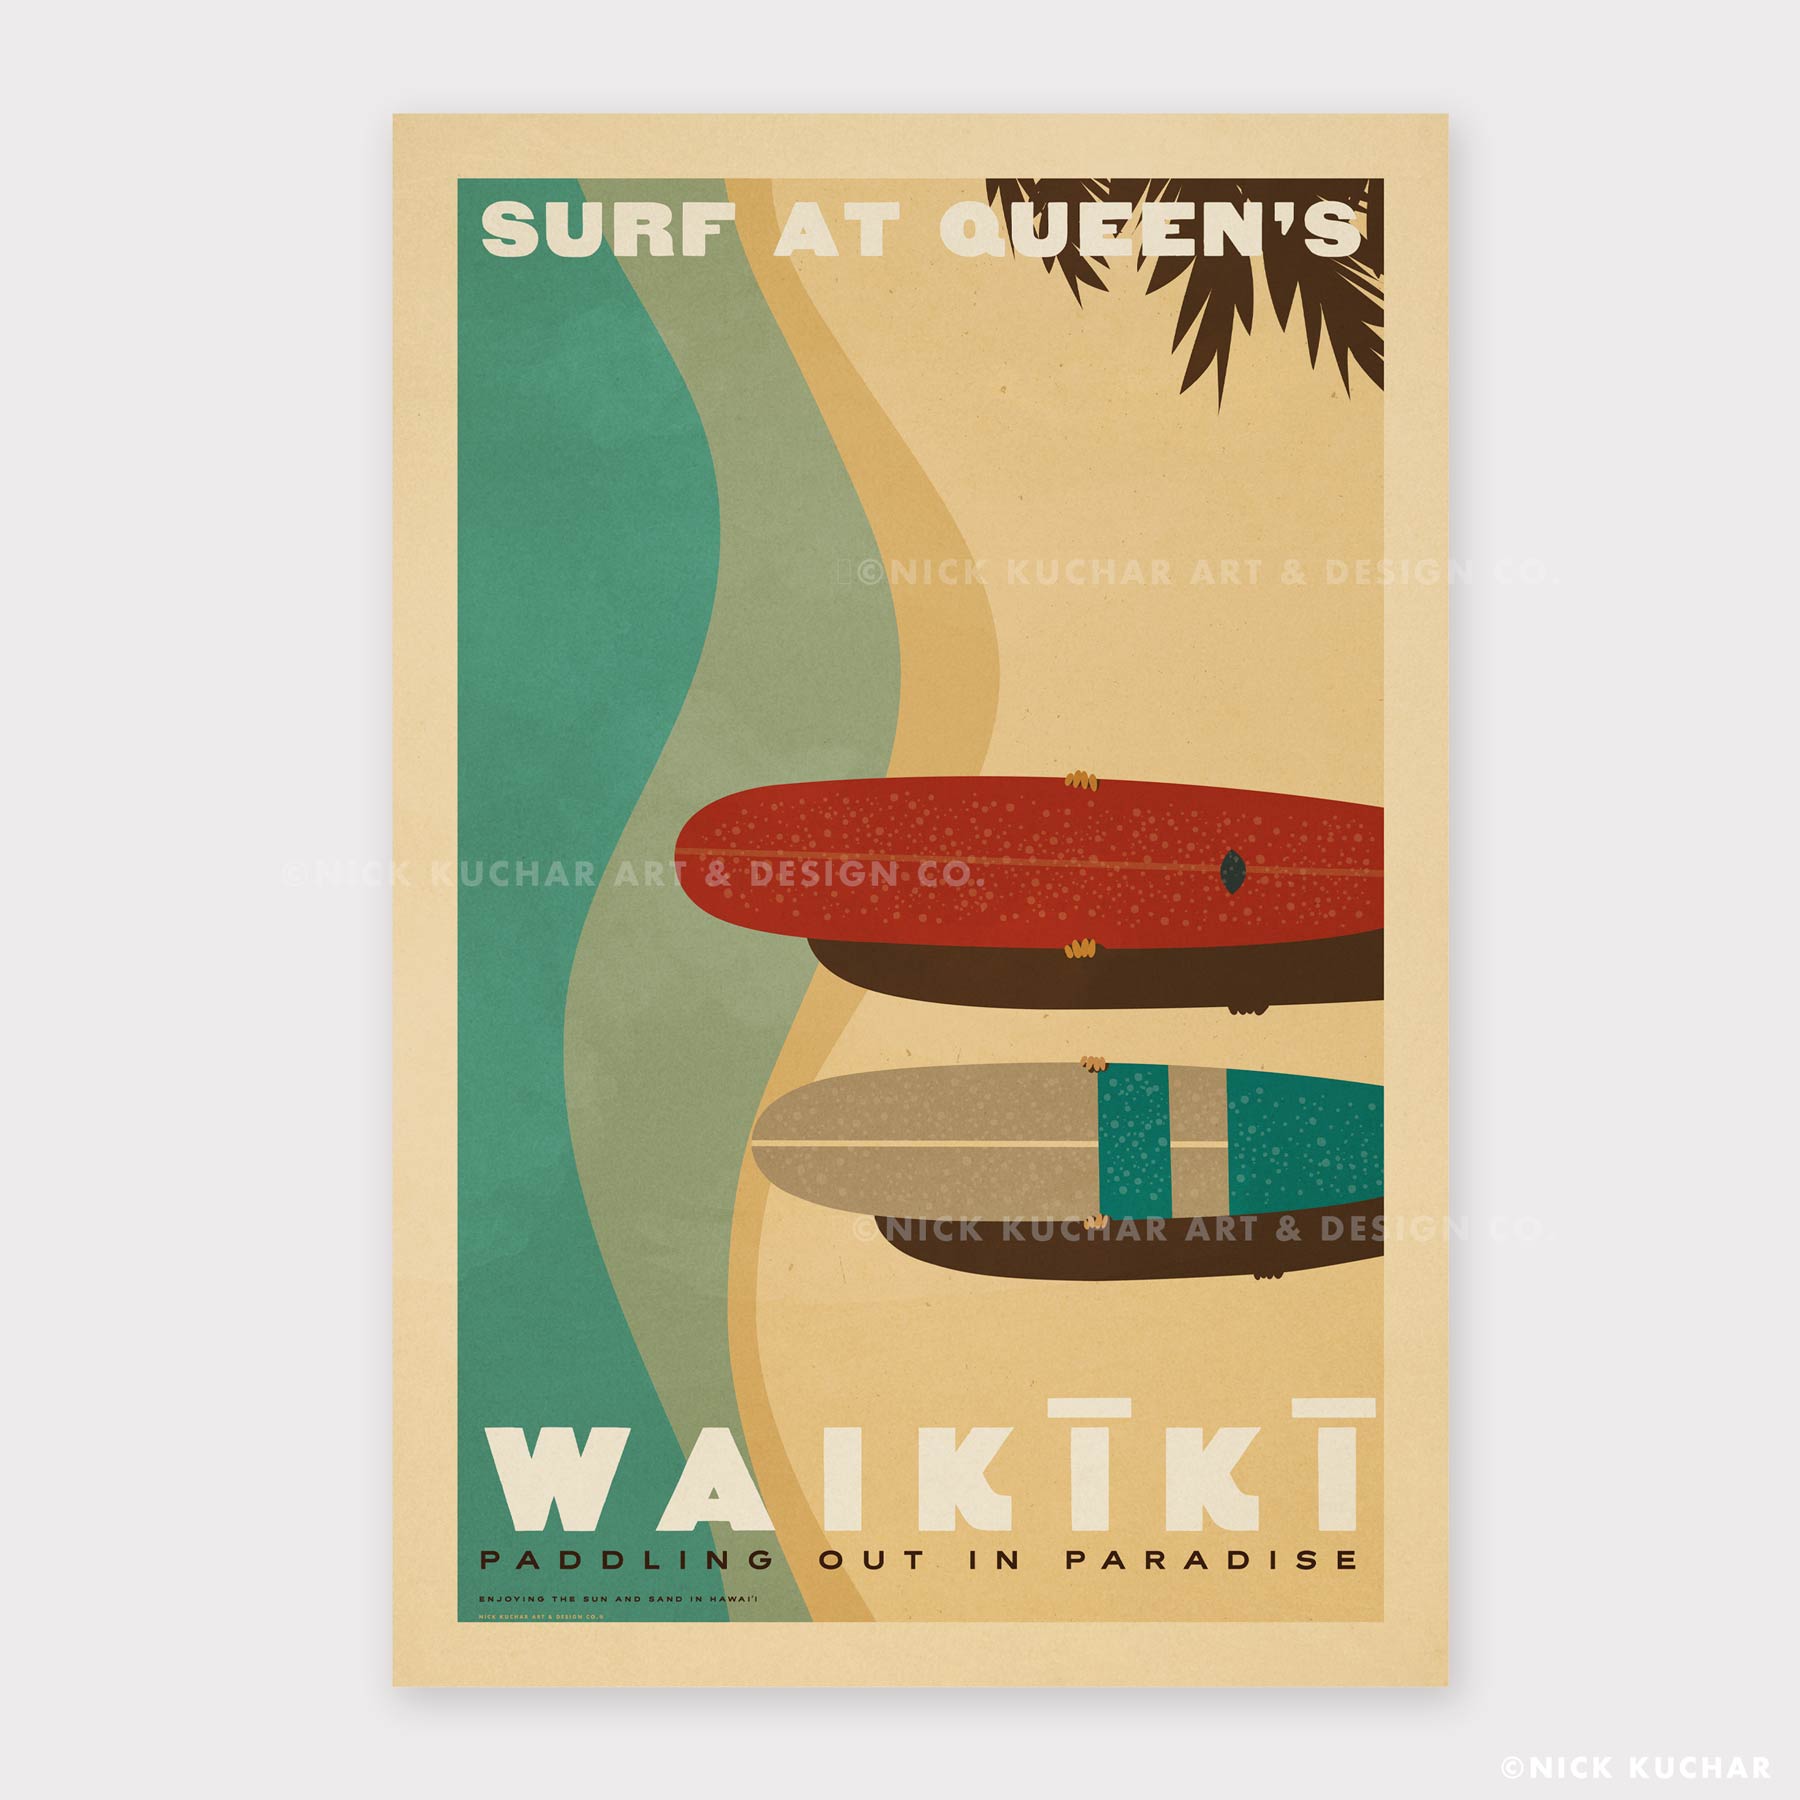 Queens Waikiki hawaii travel print by Nick Kuchar Oahu Surf Art